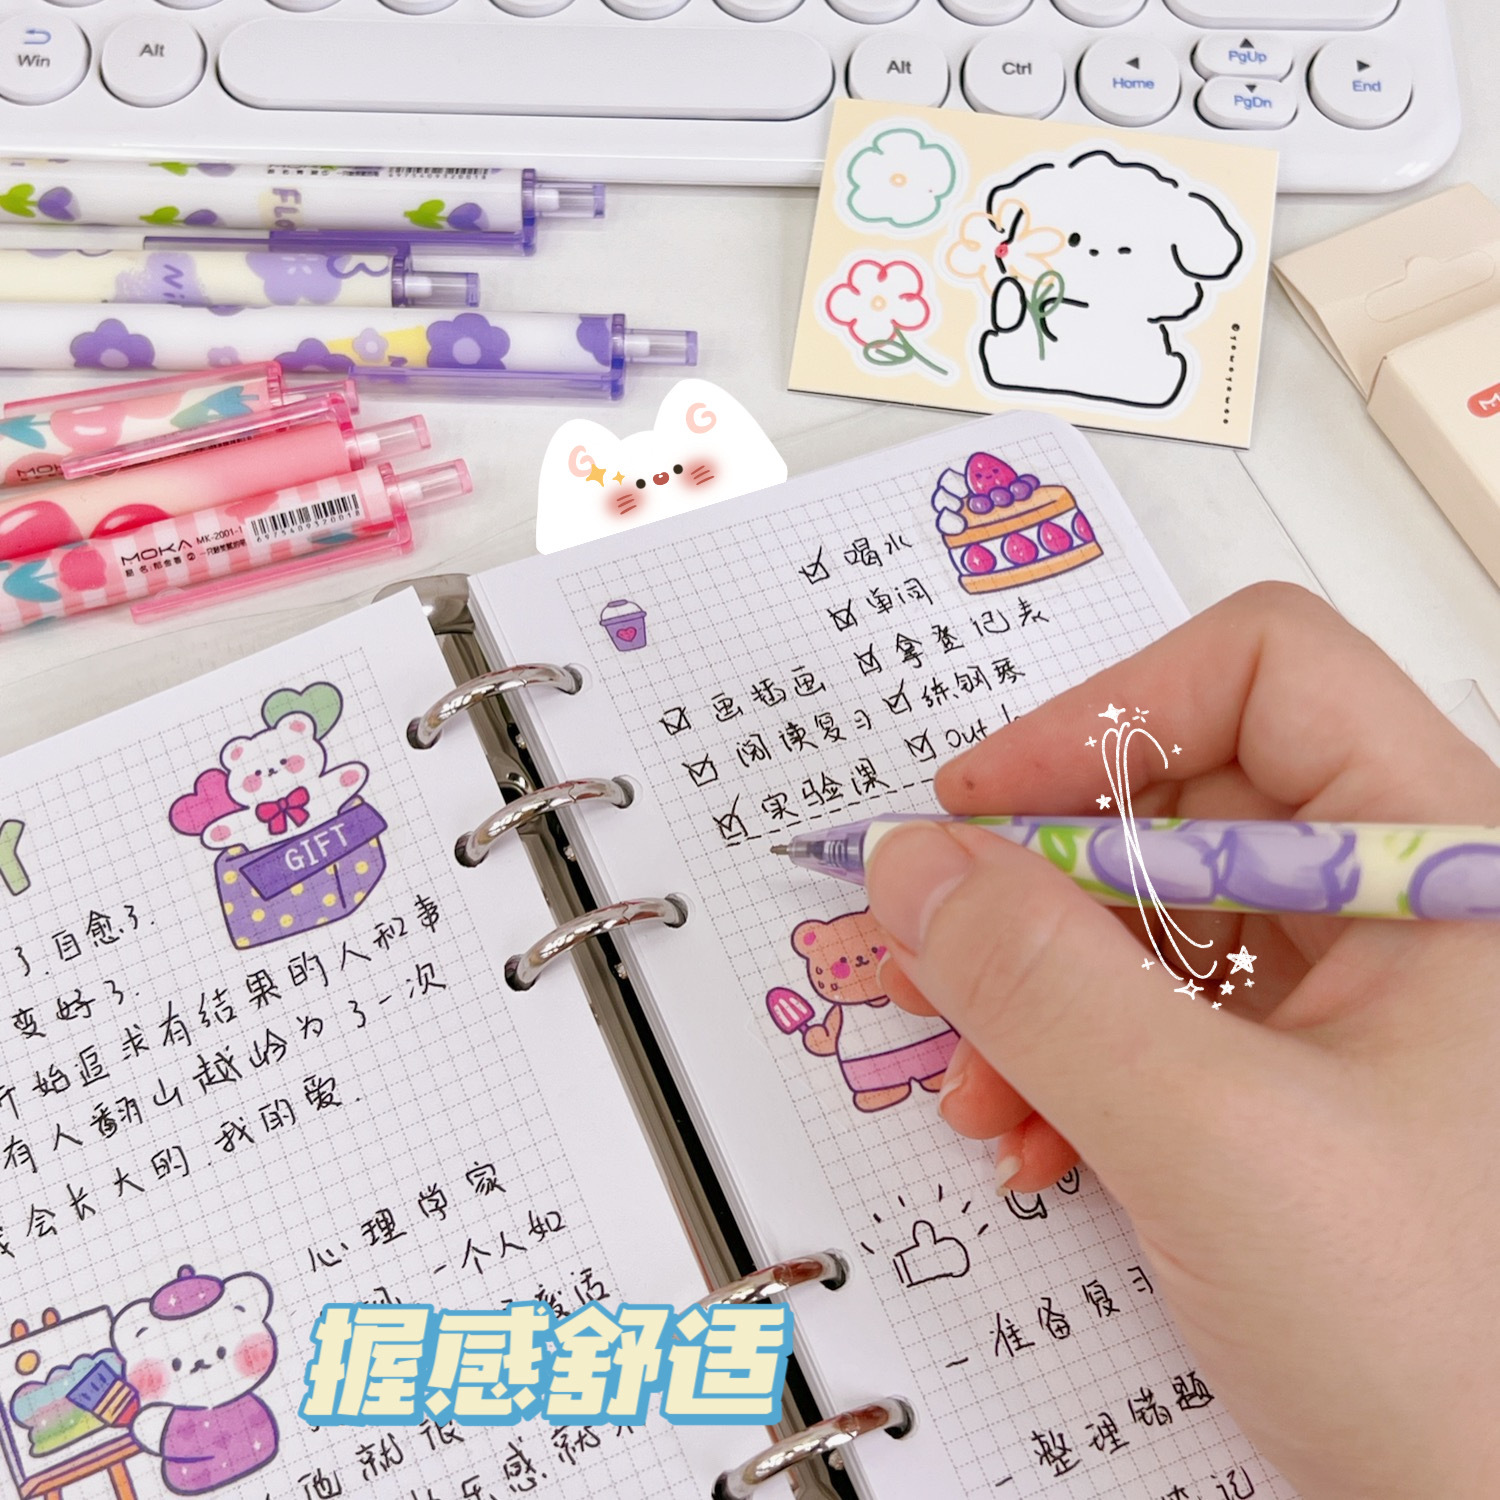 Korean Girl Heart Press Gel Pen Student 0.5mm Cute Black Signature Pen Ball Pen Ins Office Stationery